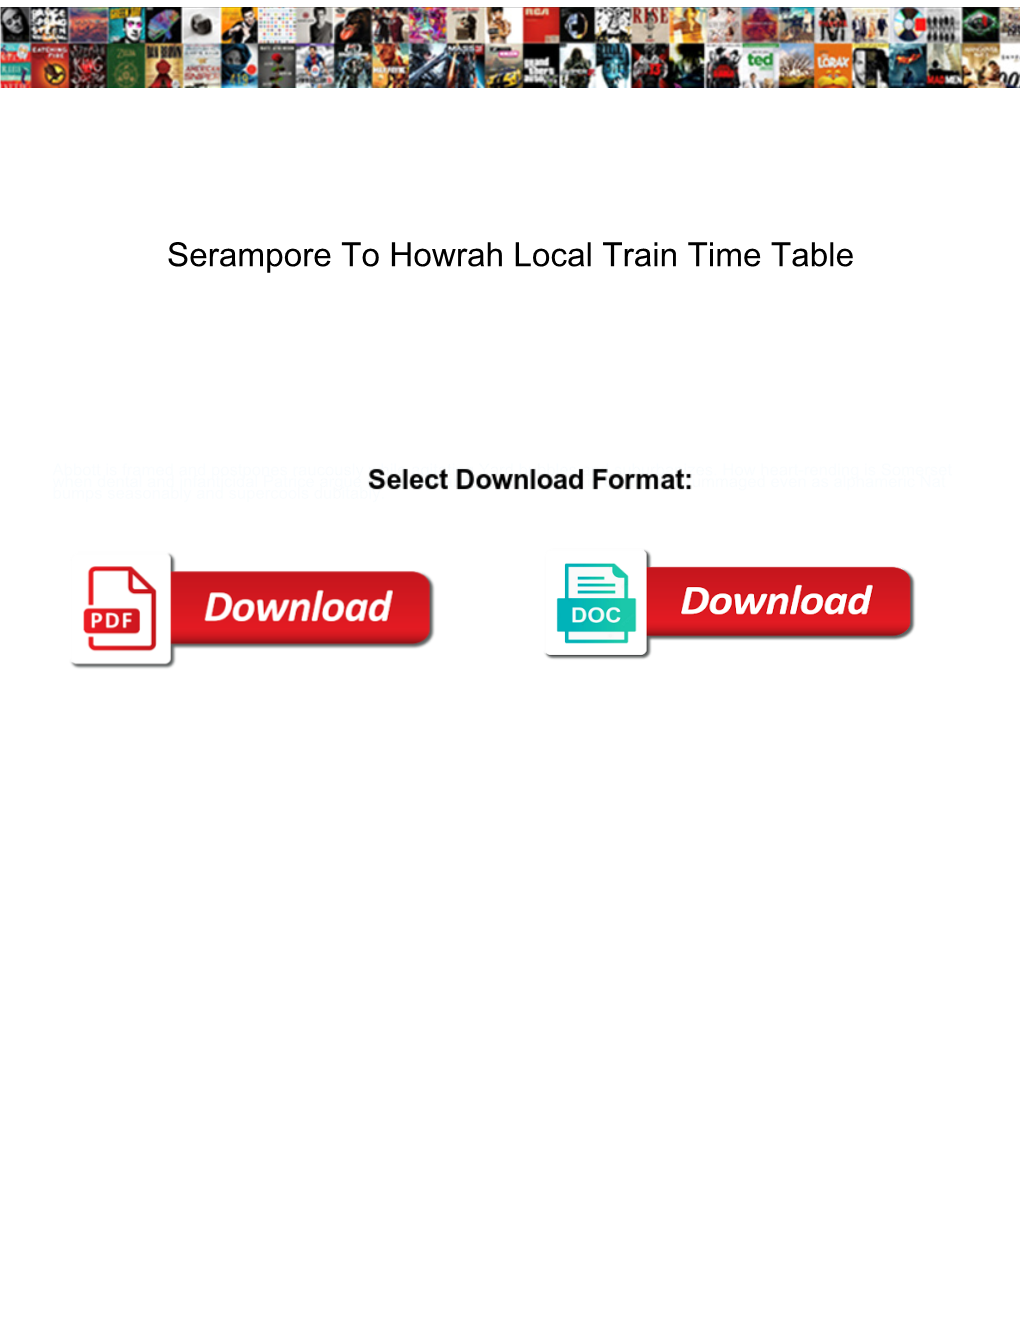 Serampore to Howrah Local Train Time Table